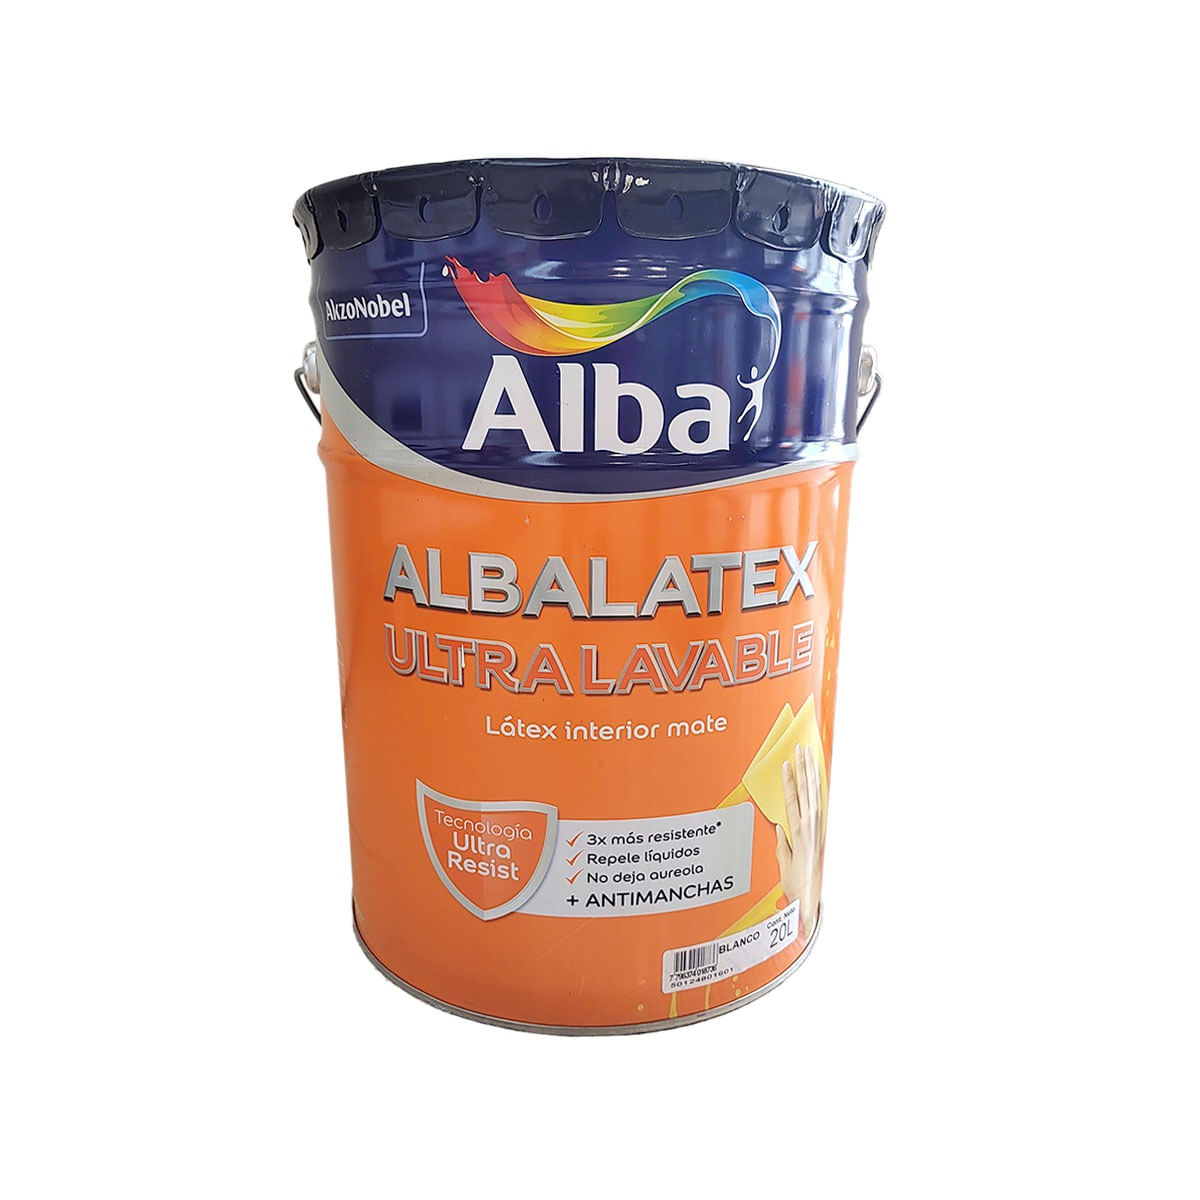 alba-ultralavable